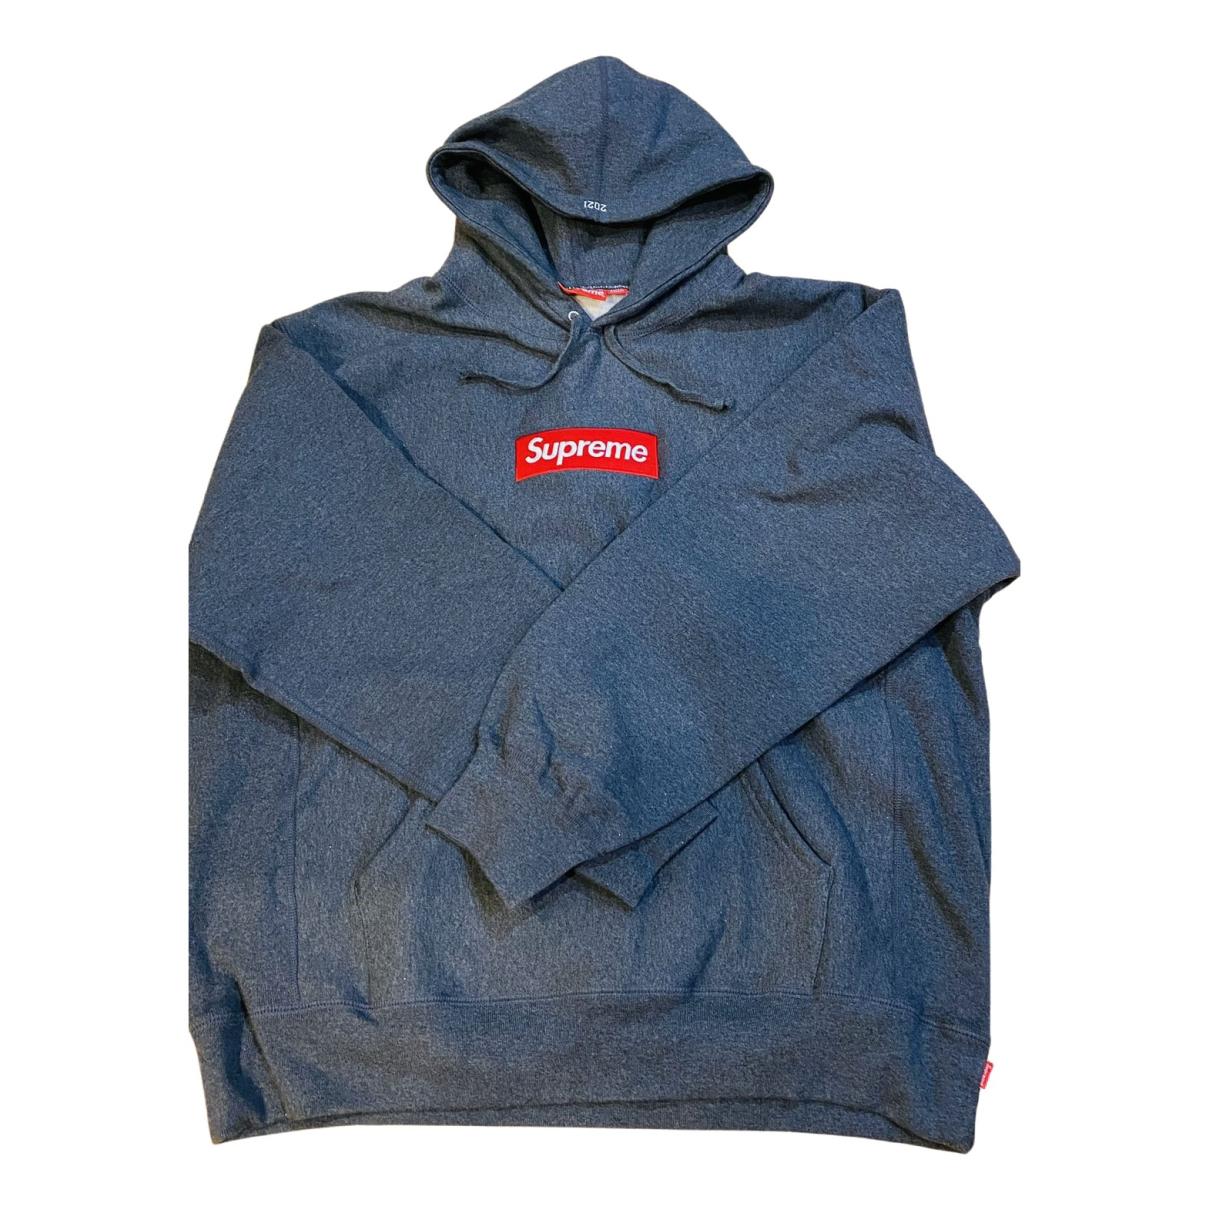 Box logo sweatshirt Supreme Grey size XL International in Cotton - 33832980